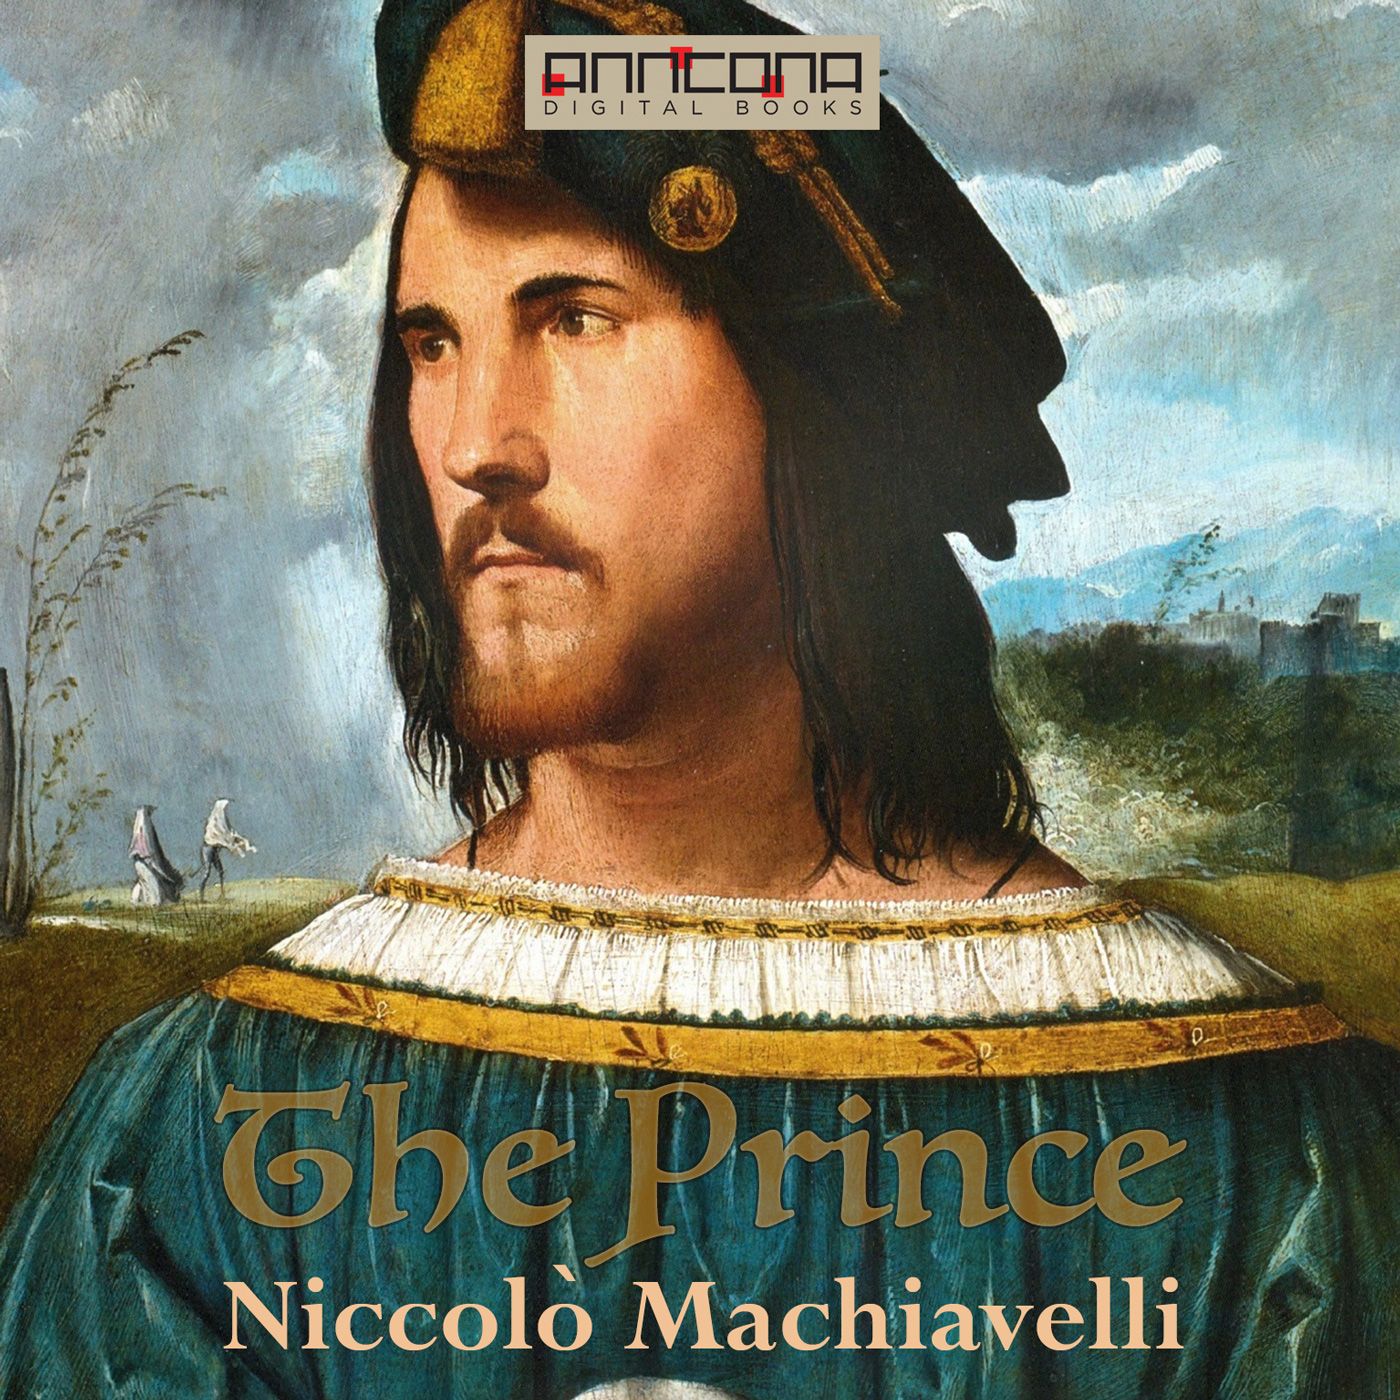 The Prince, ljudbok av Niccolò Machiavelli